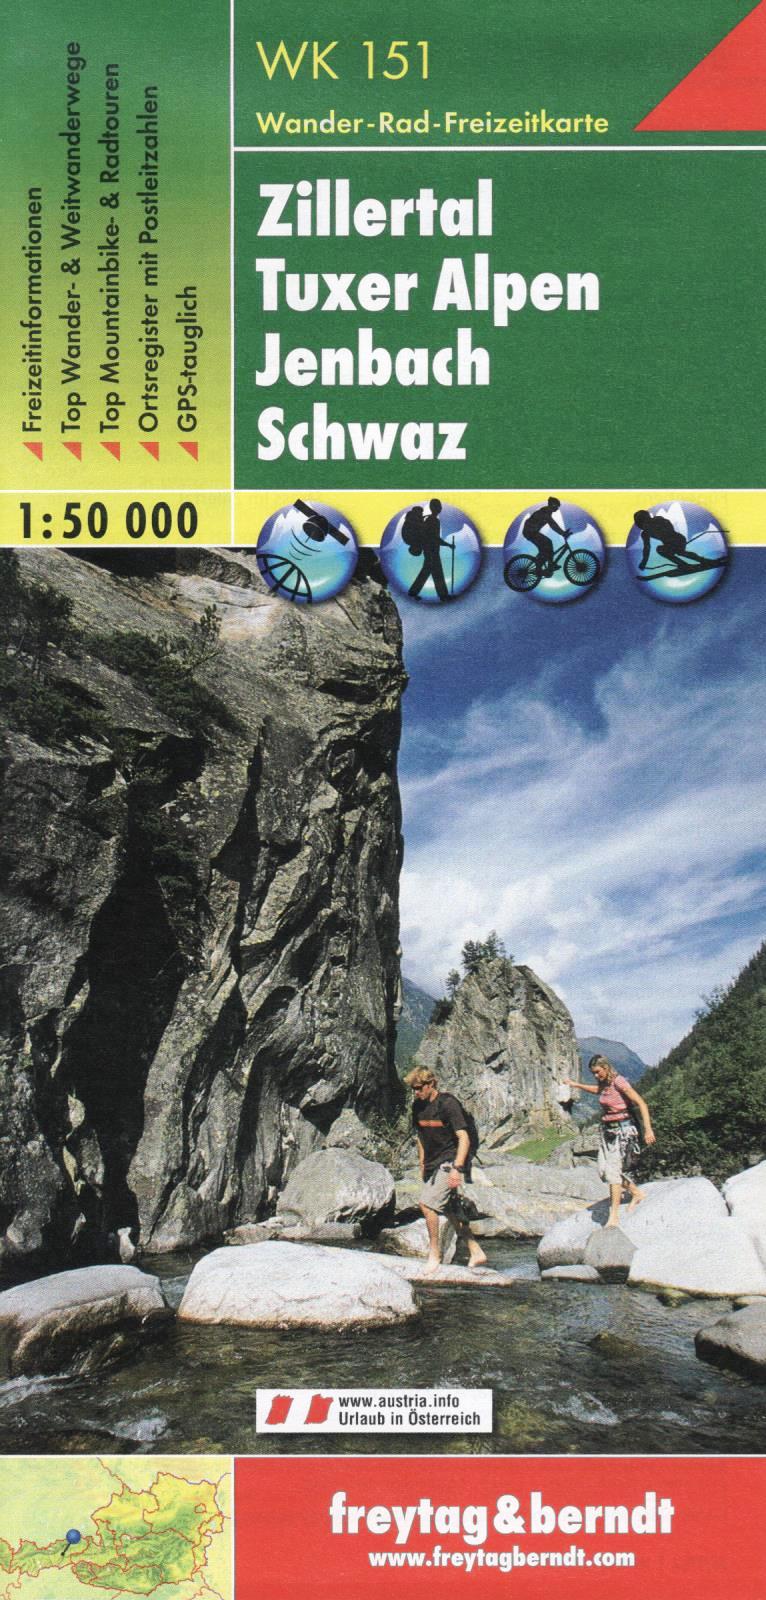 WK151 Zillertal, Tuxer Alpen, Jenbach, Schwaz 1:50t turistická mapa FB